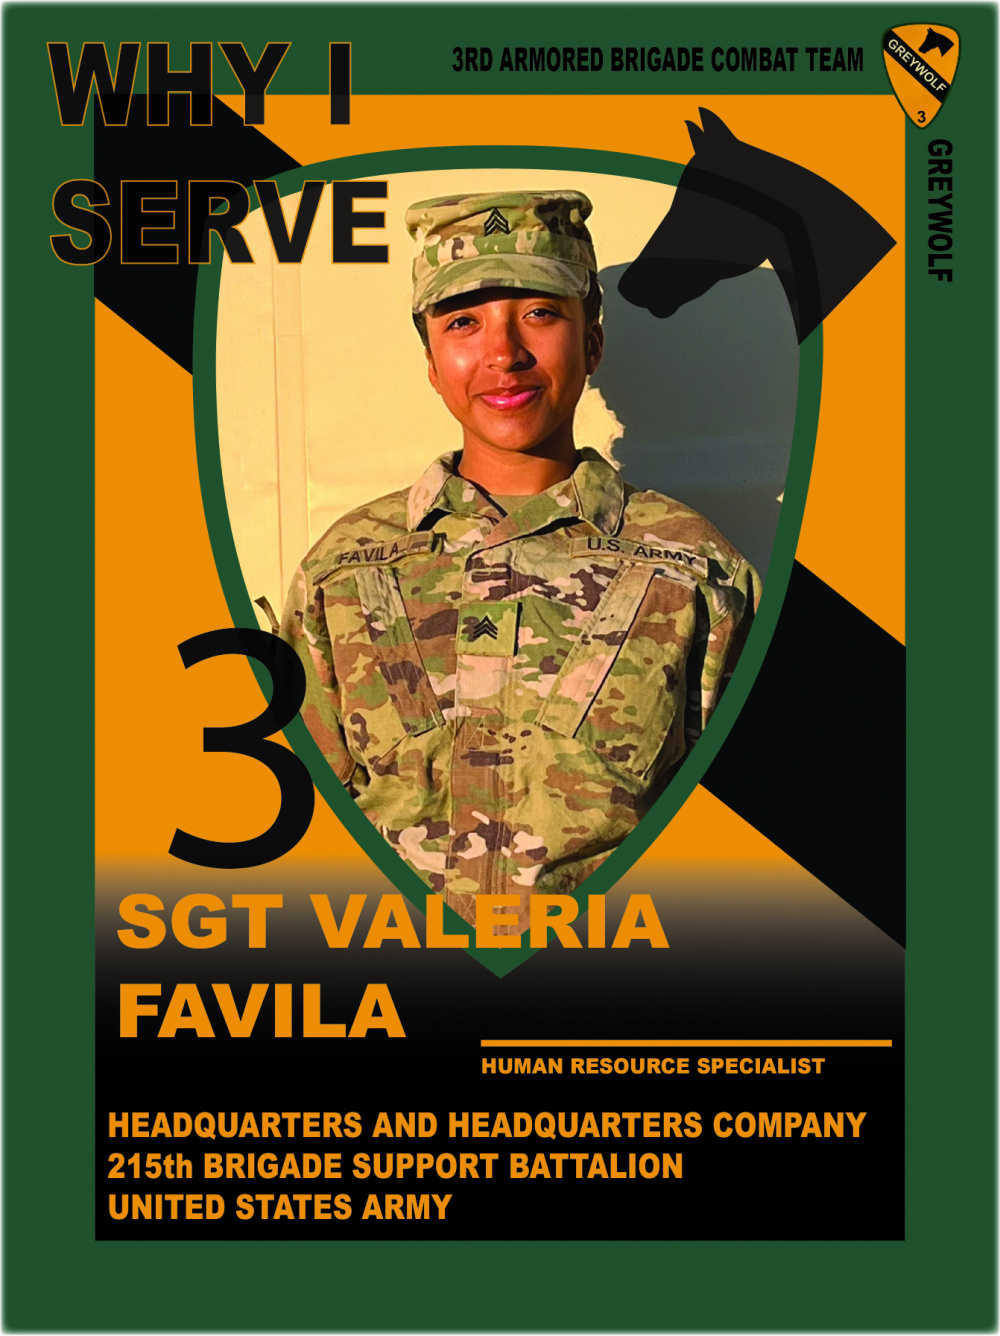 Why I Serve - Sgt. Valeria Favila